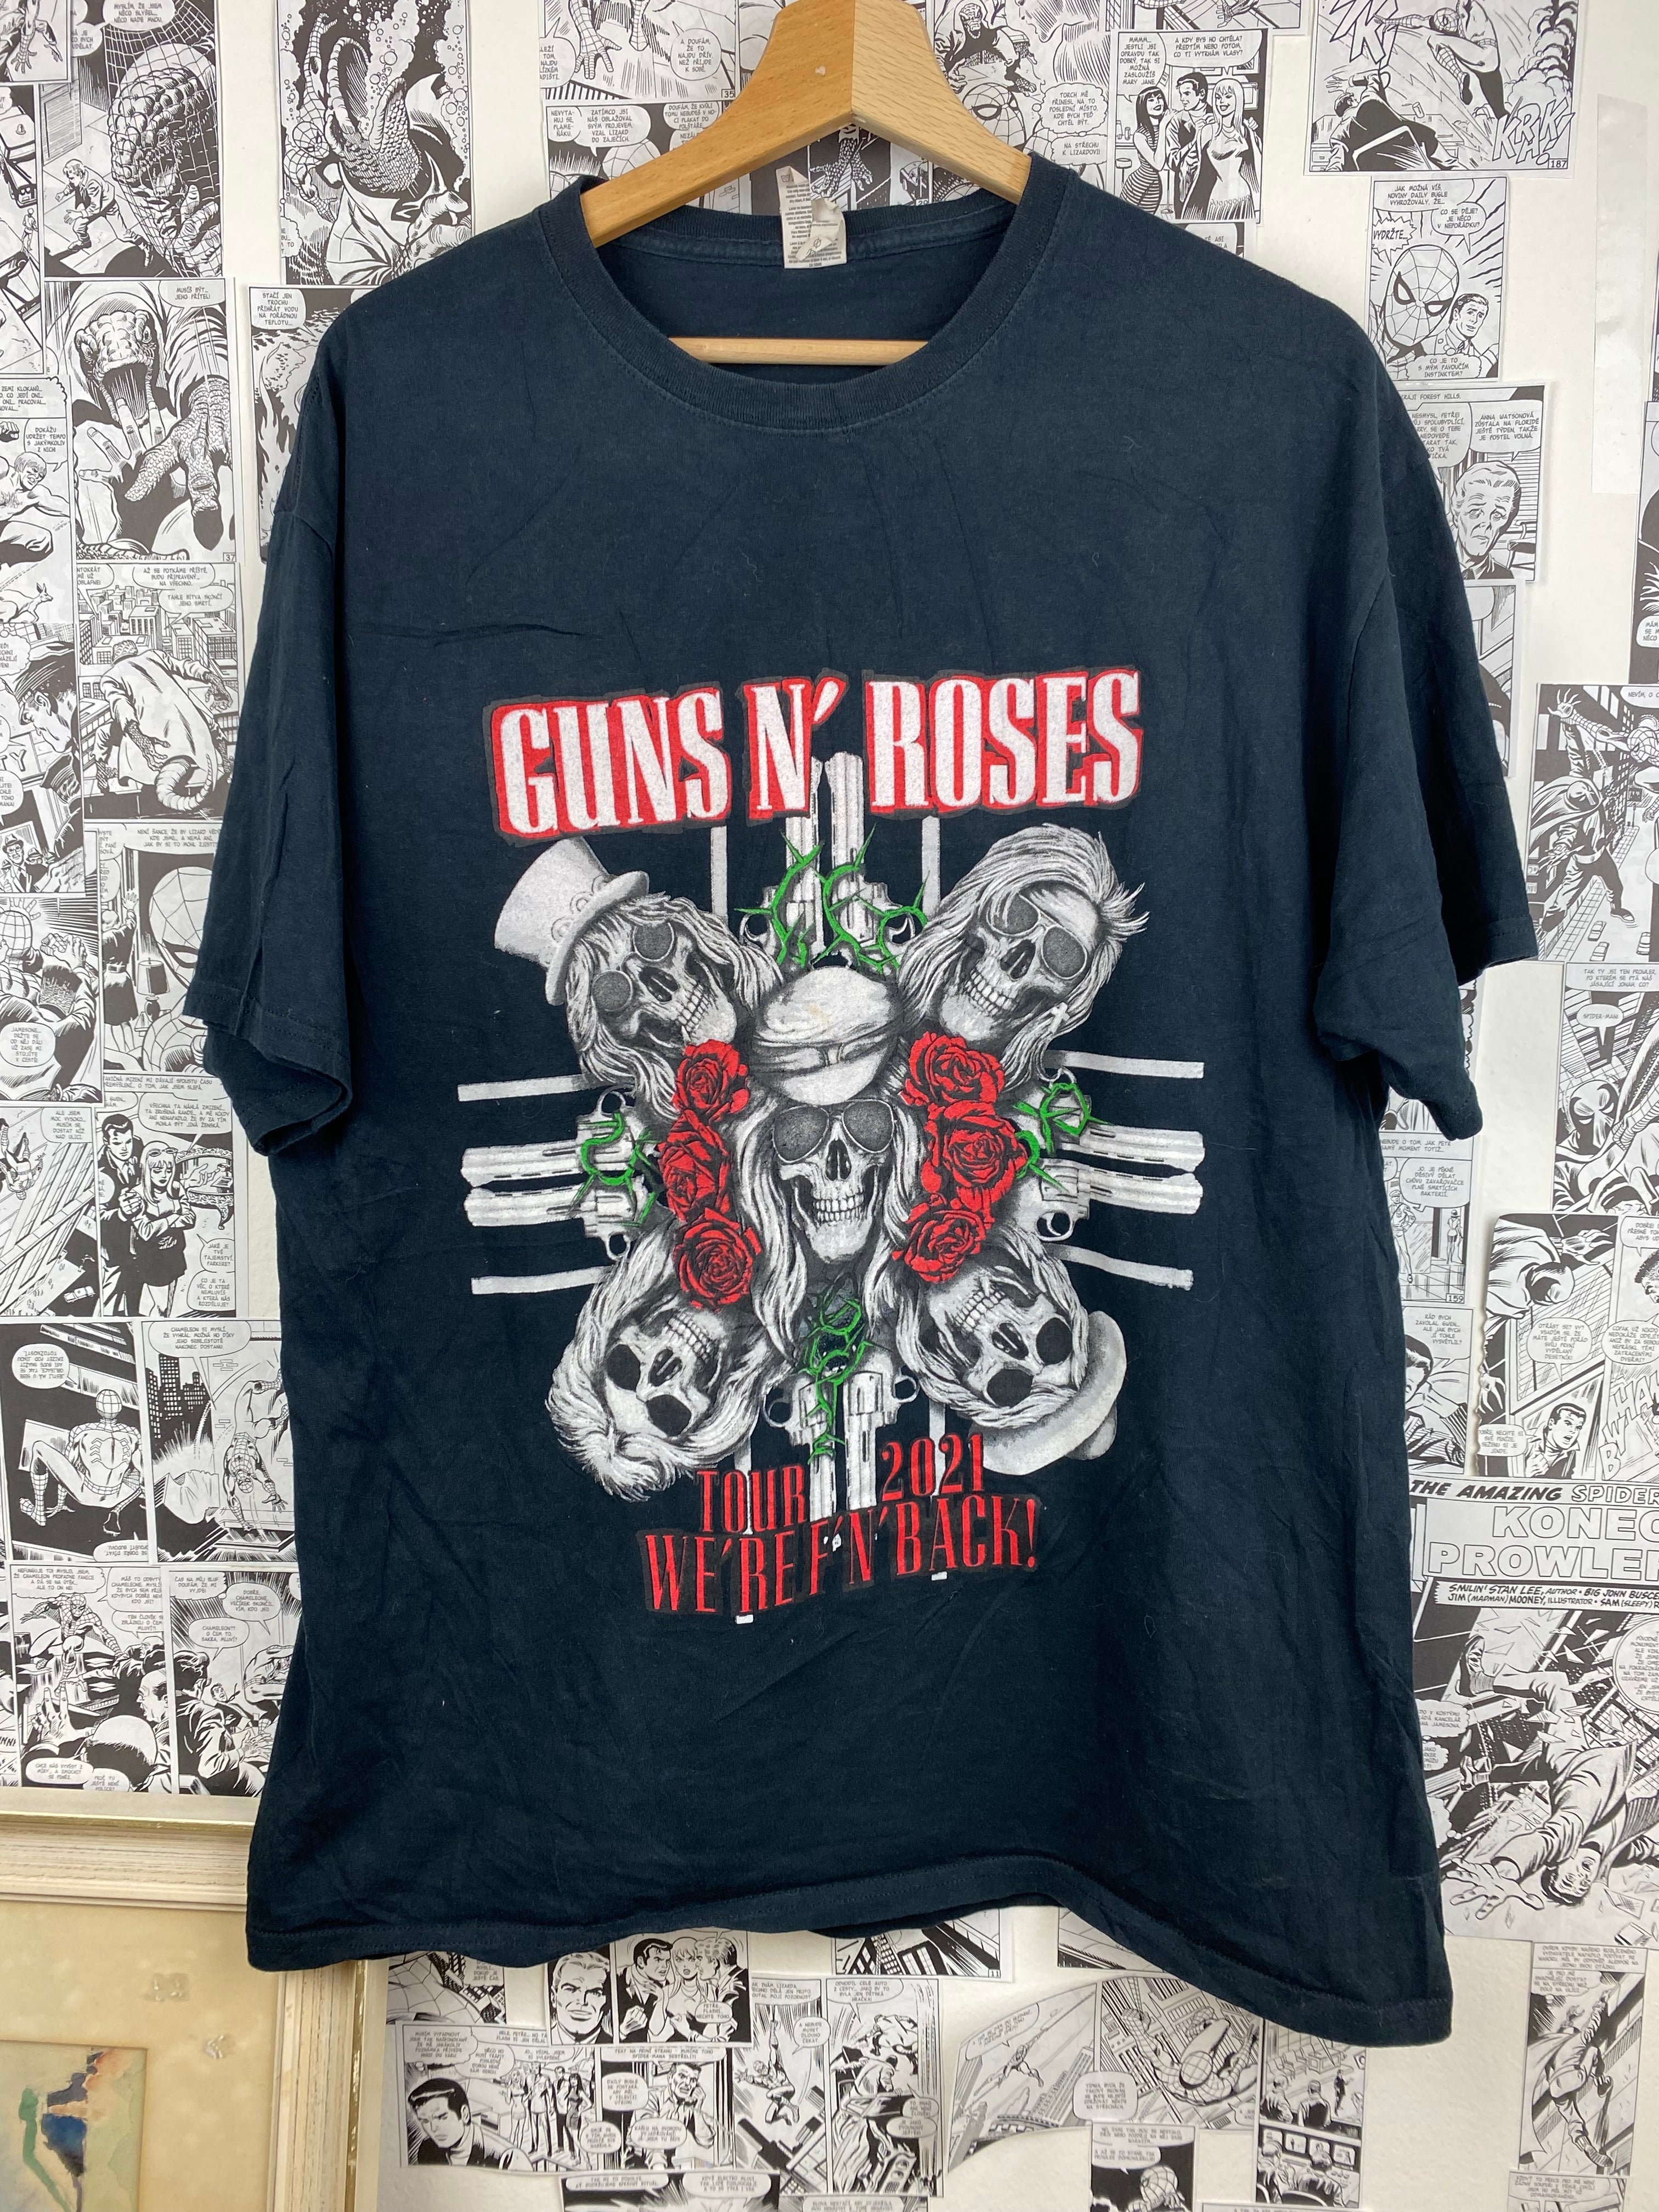 Guns N’ Roses 2021 tour t-shirt - size L